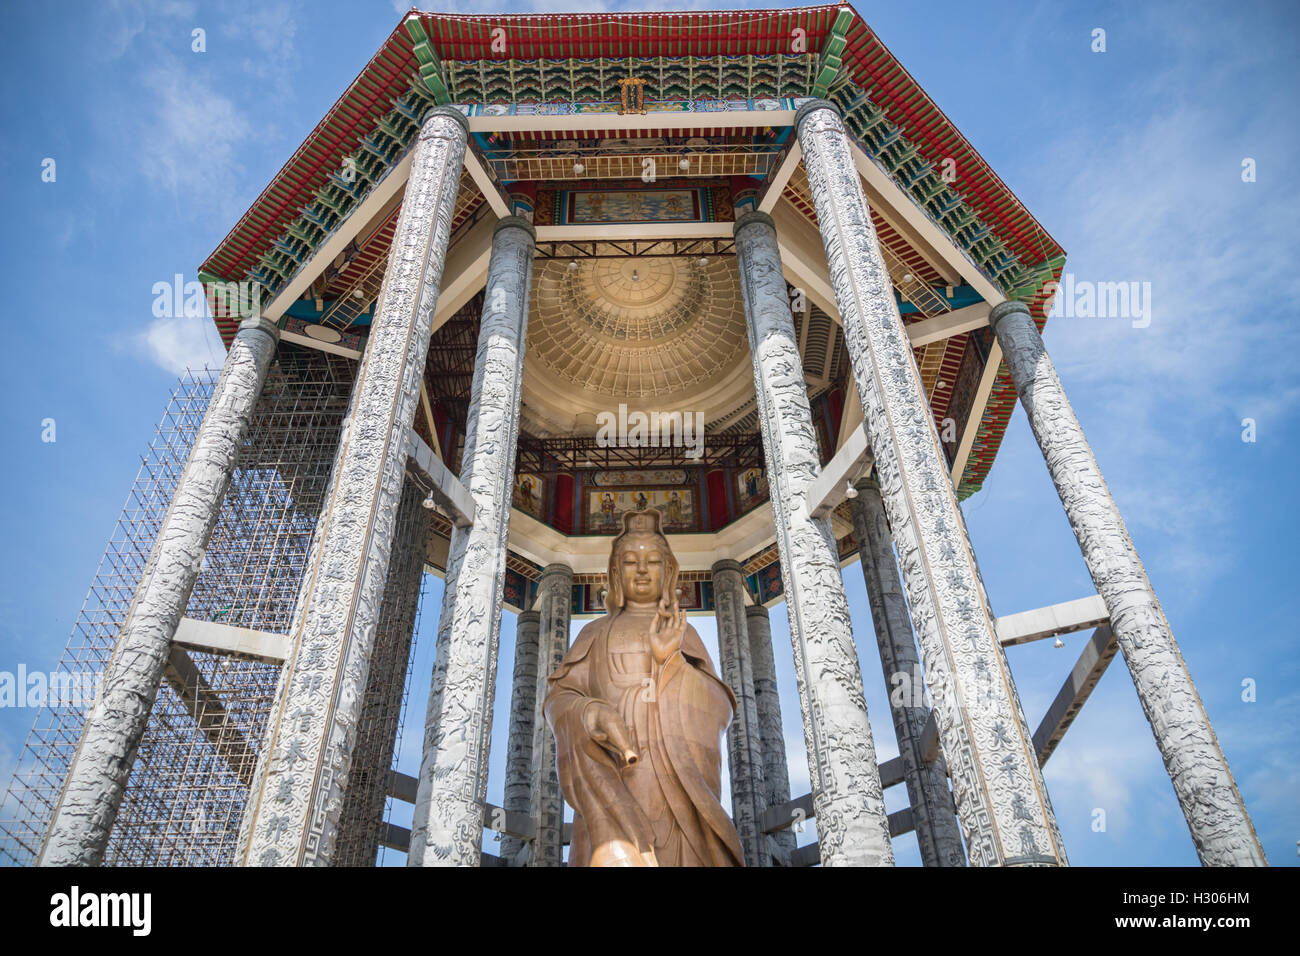 Guanyin statue at kek lok si temple, penang, malaysia. Stock Photo